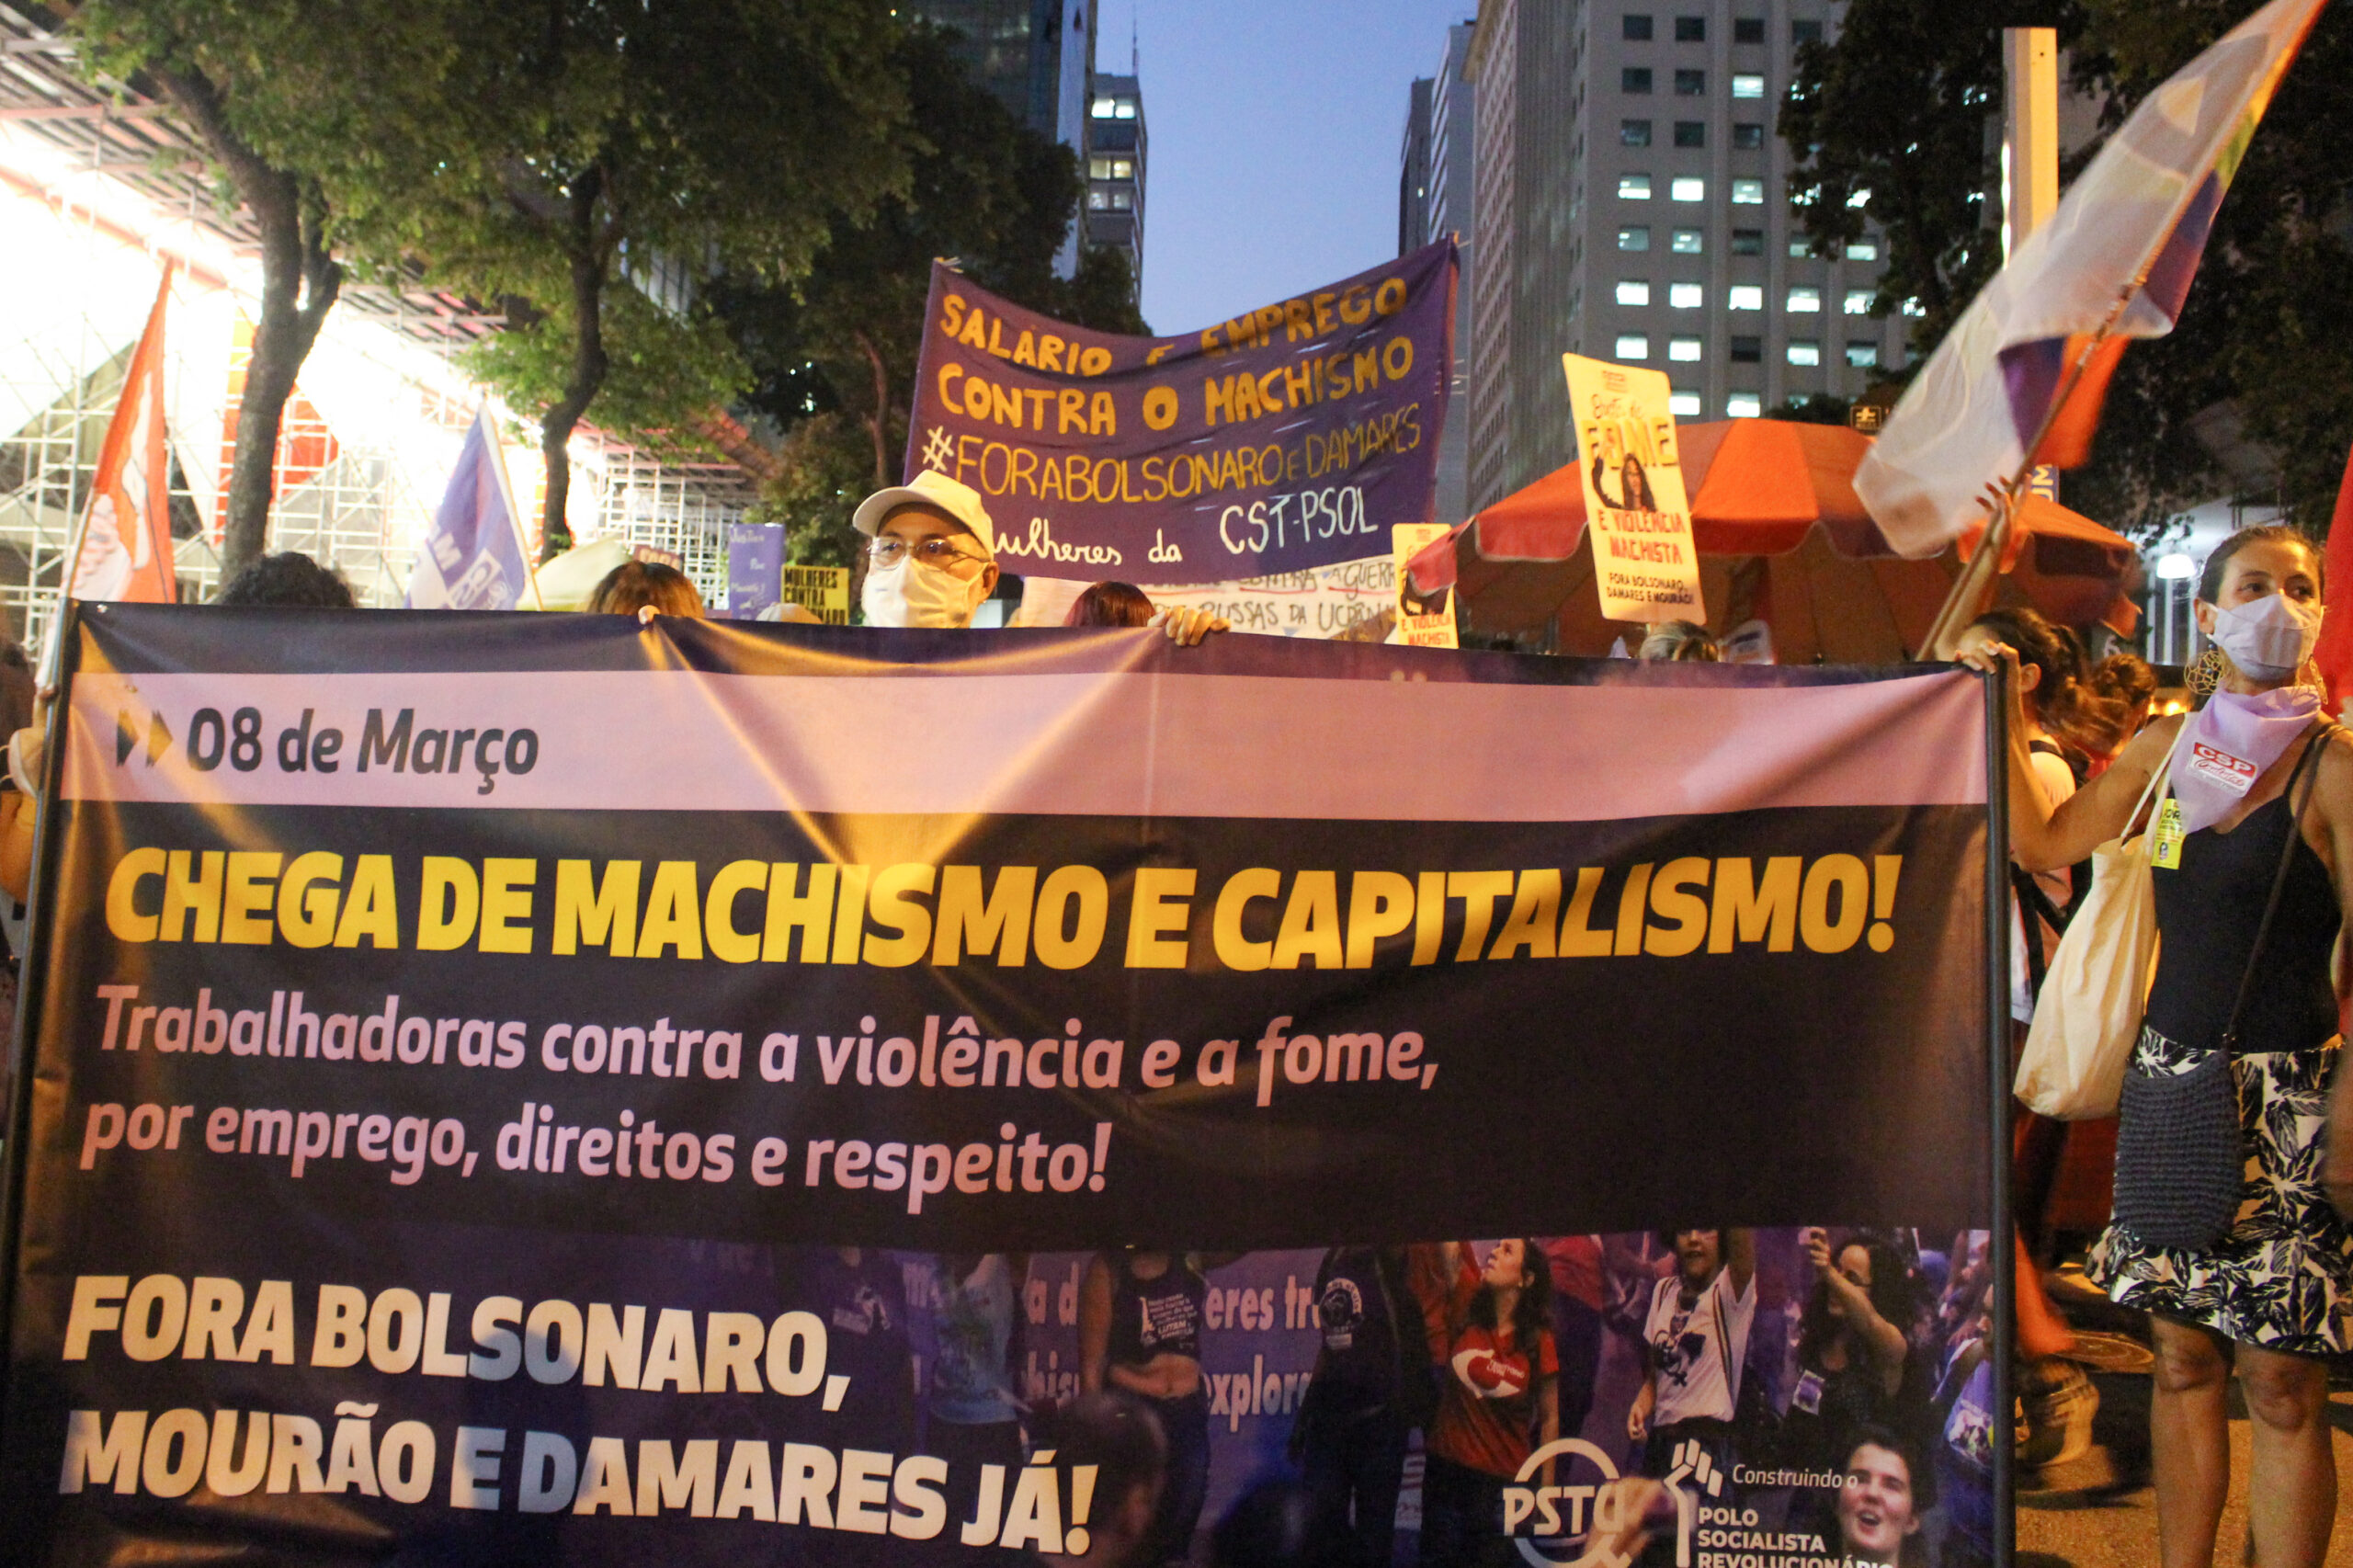 Unemployment and vulnerability among women were part of the protest agenda. Photo: Jaqueline Suarez